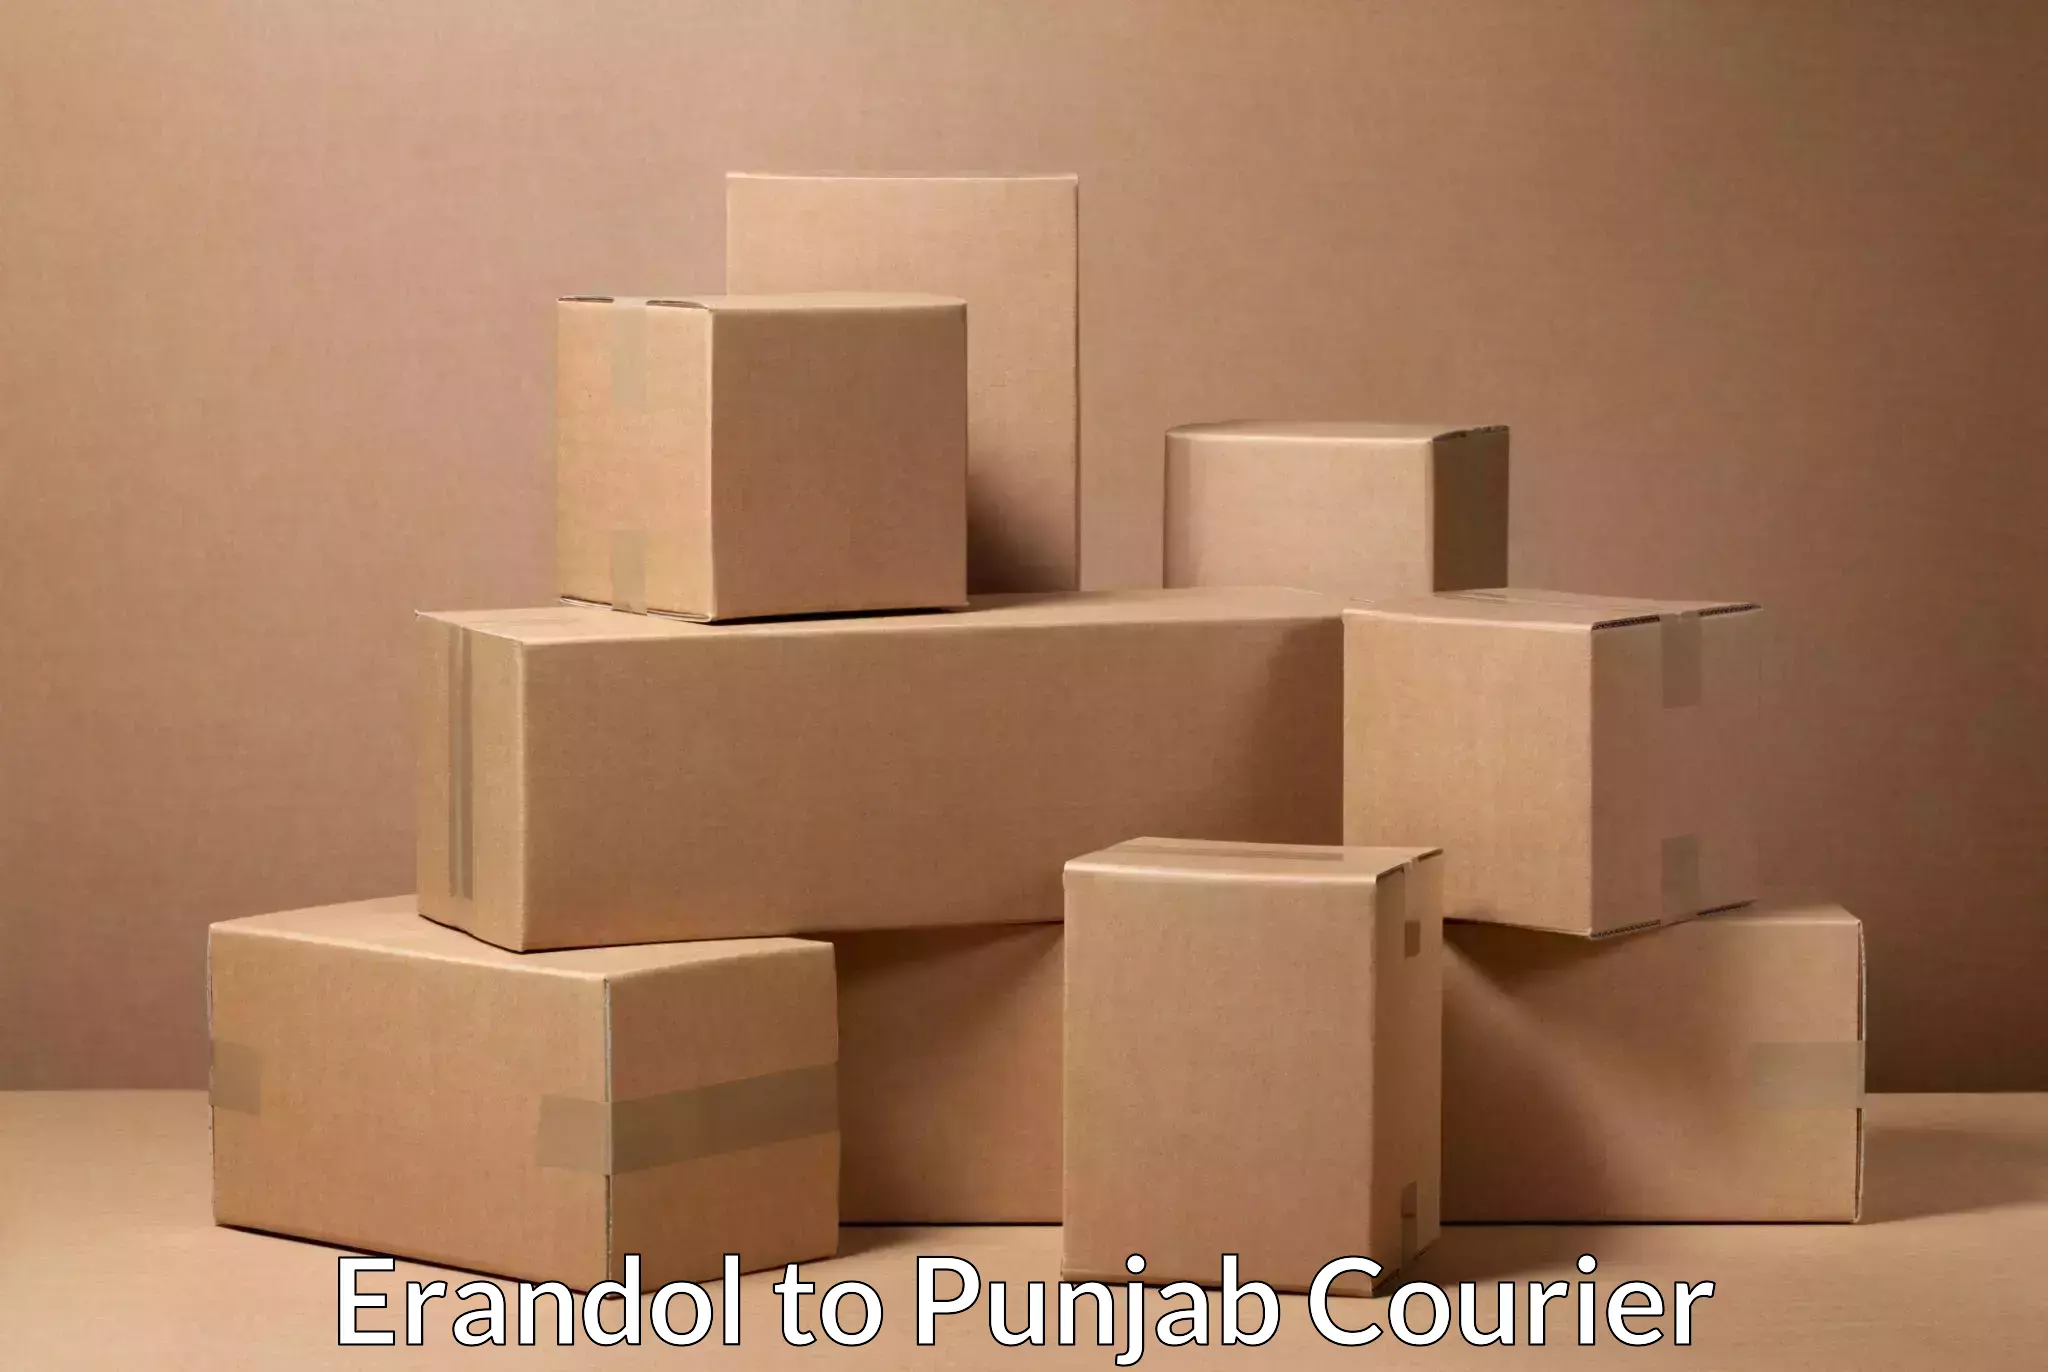 High-speed parcel service Erandol to Central University of Punjab Bathinda